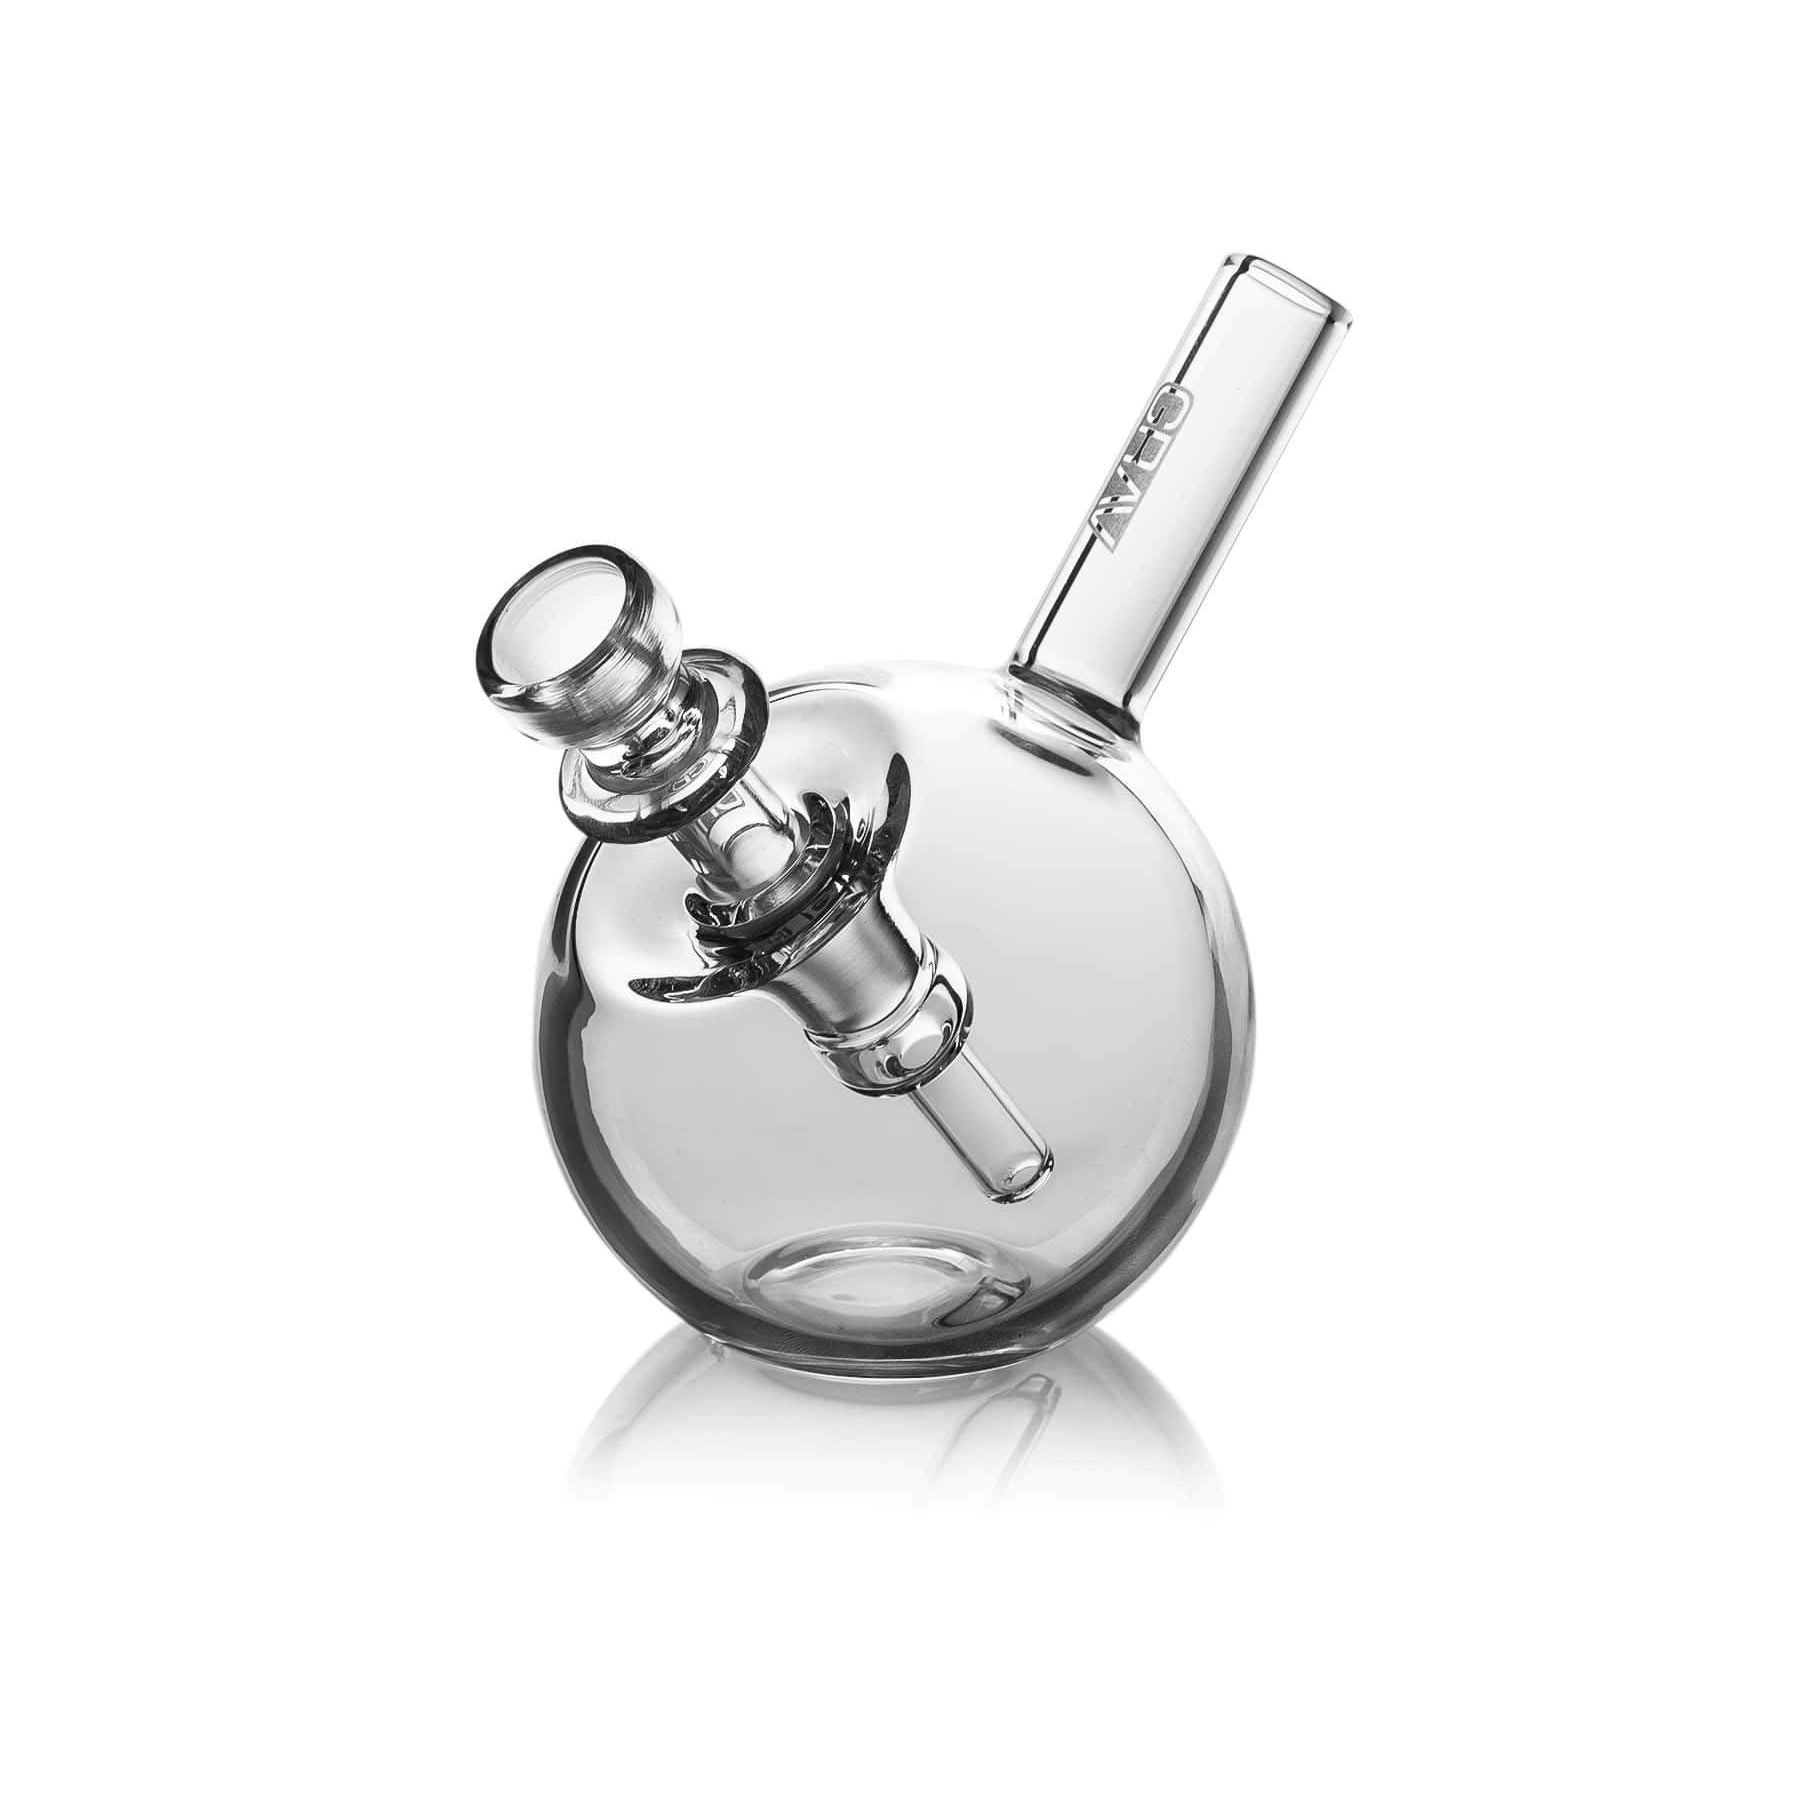 grav labs spherical pocket bubbler mini rig